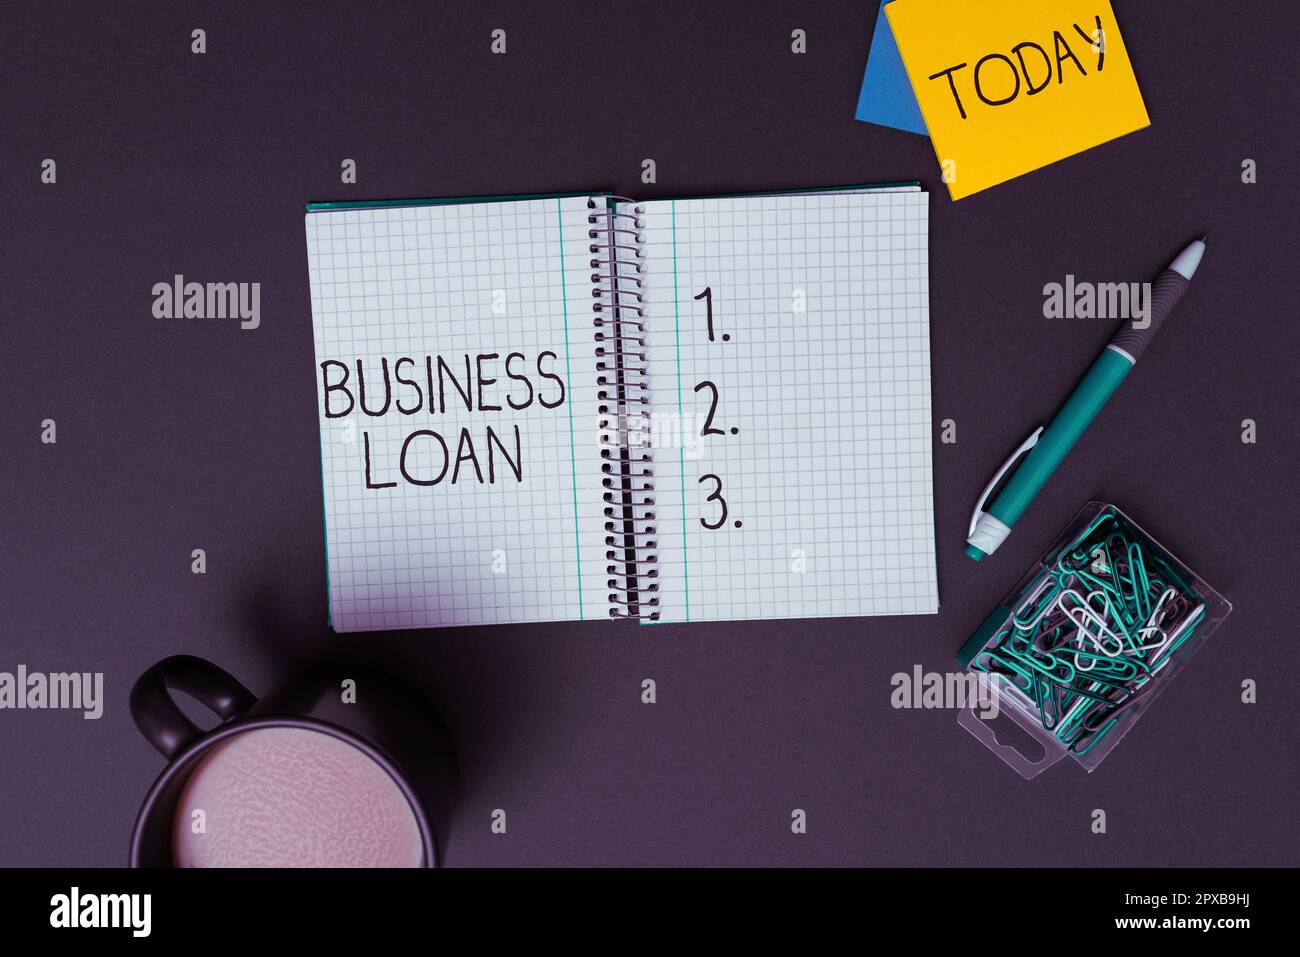 Text caption presenting Business Loan, Internet Concept Credit Mortgage Financial Assistance Cash Advances Debt Stock Photo